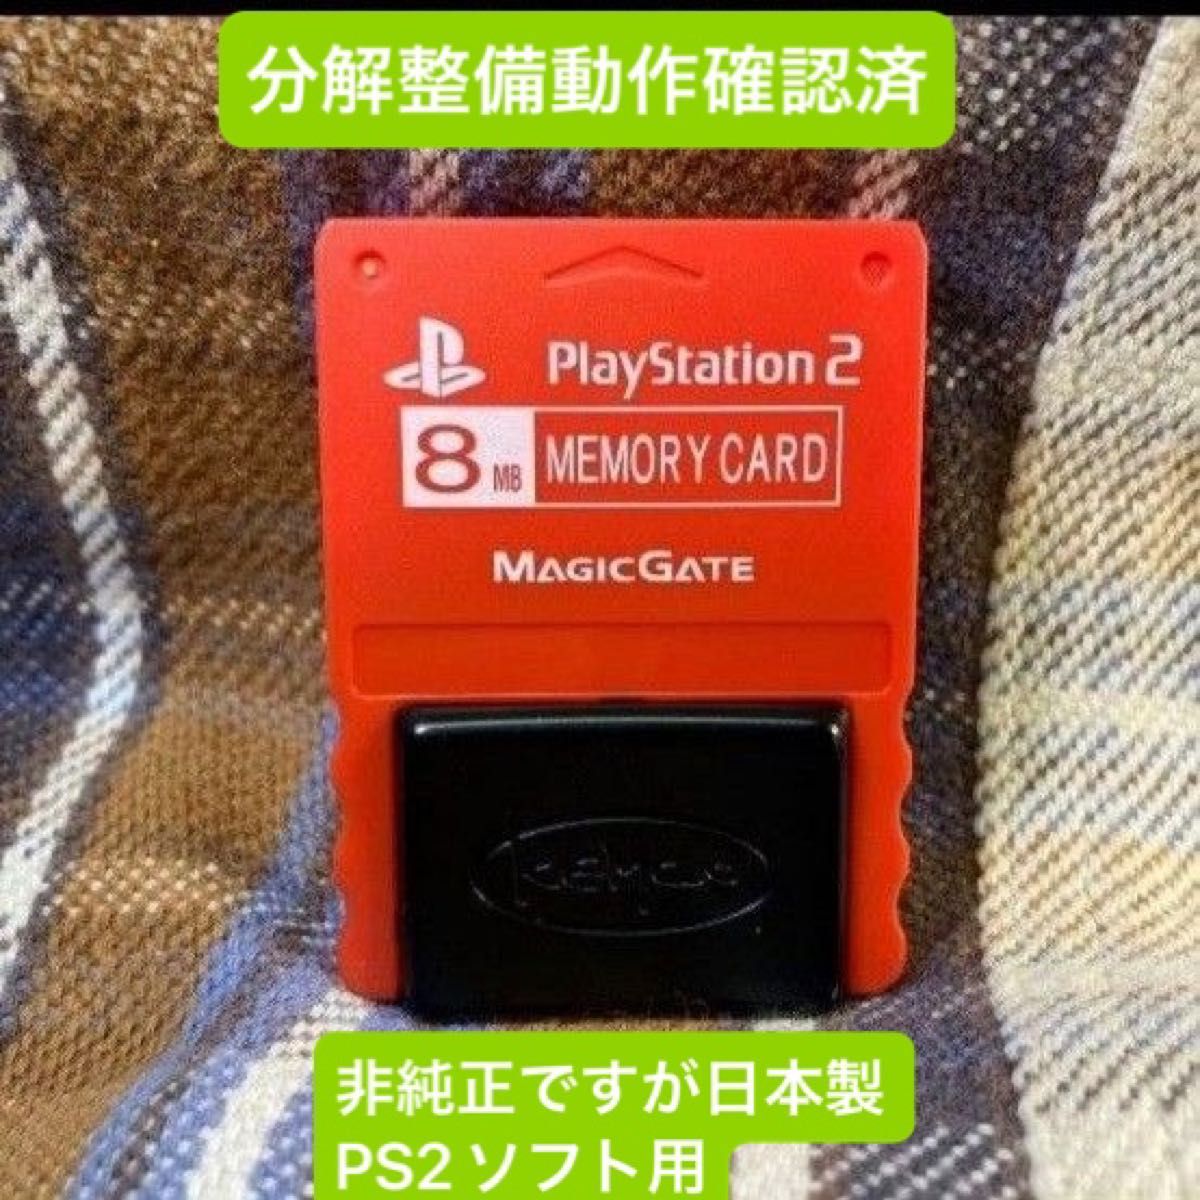 p300非純正ケムコ コトブキPS2用メモリーカード1個 即購入歓迎動確初済 プレイステーション2